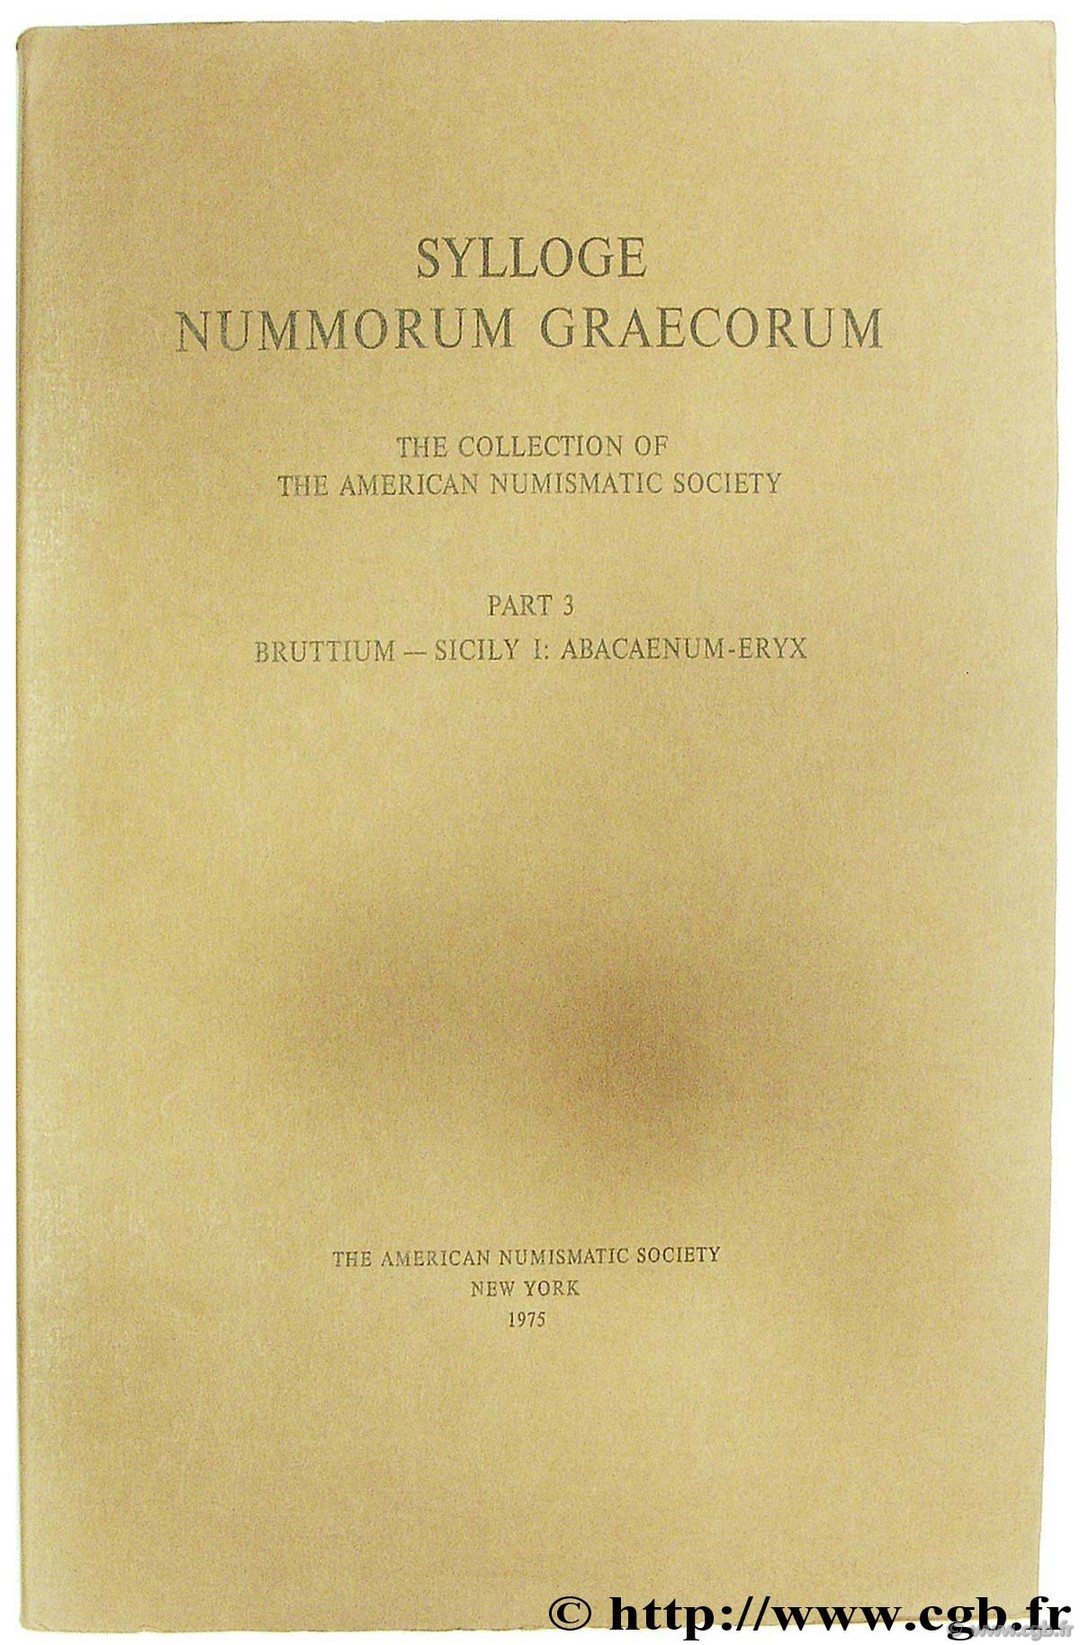 Sylloge Nummorum Graecorum The Collection of the American Numismatic Society 